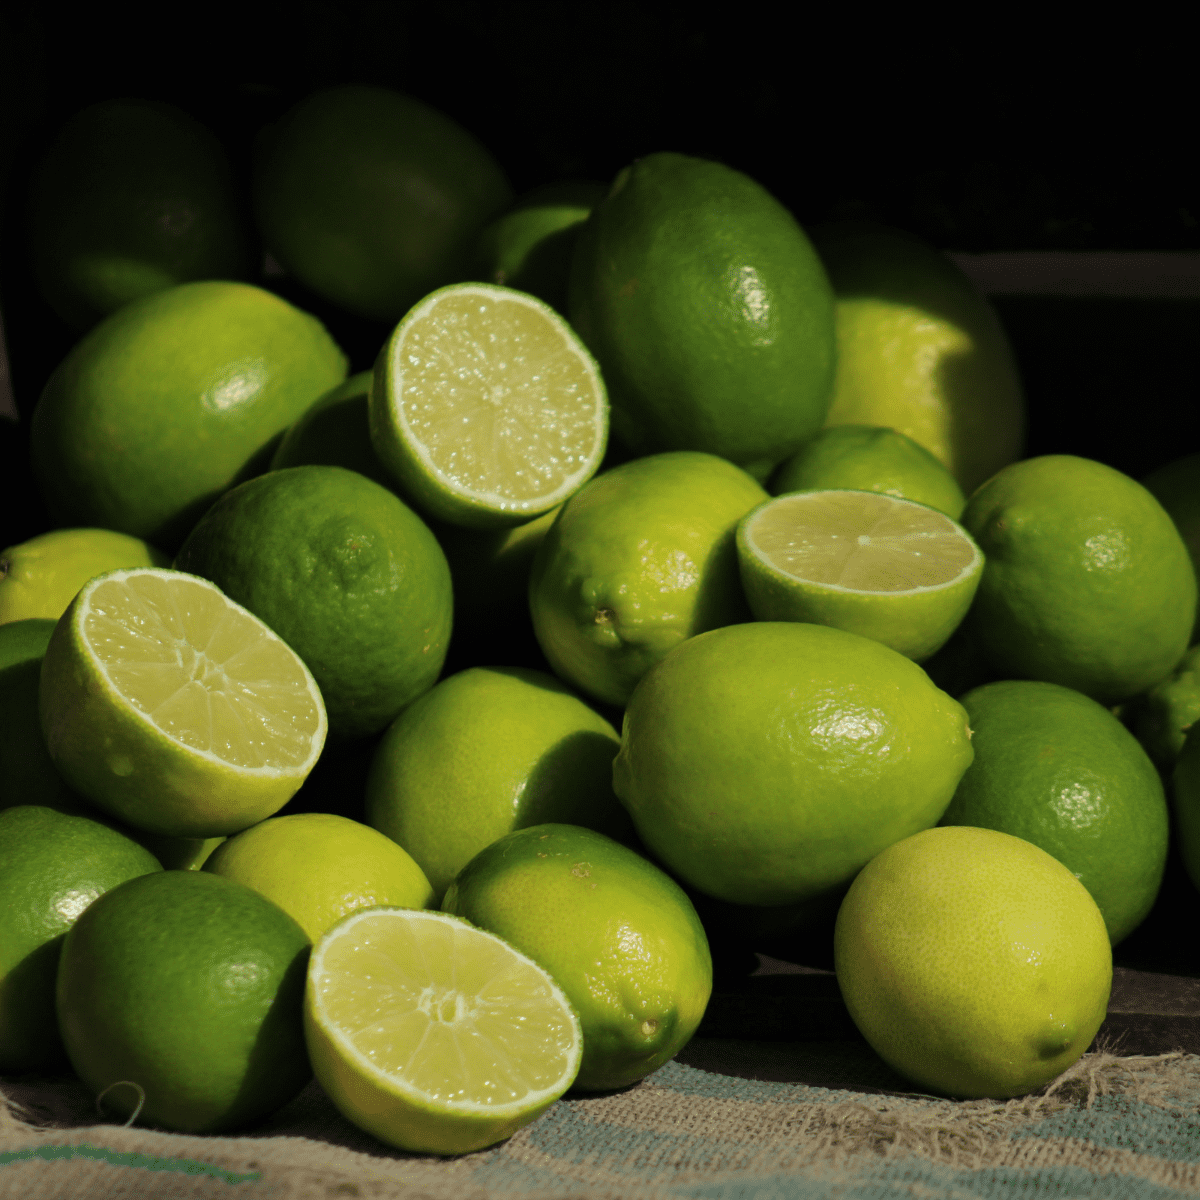 Citron vert (lime) (fruits)